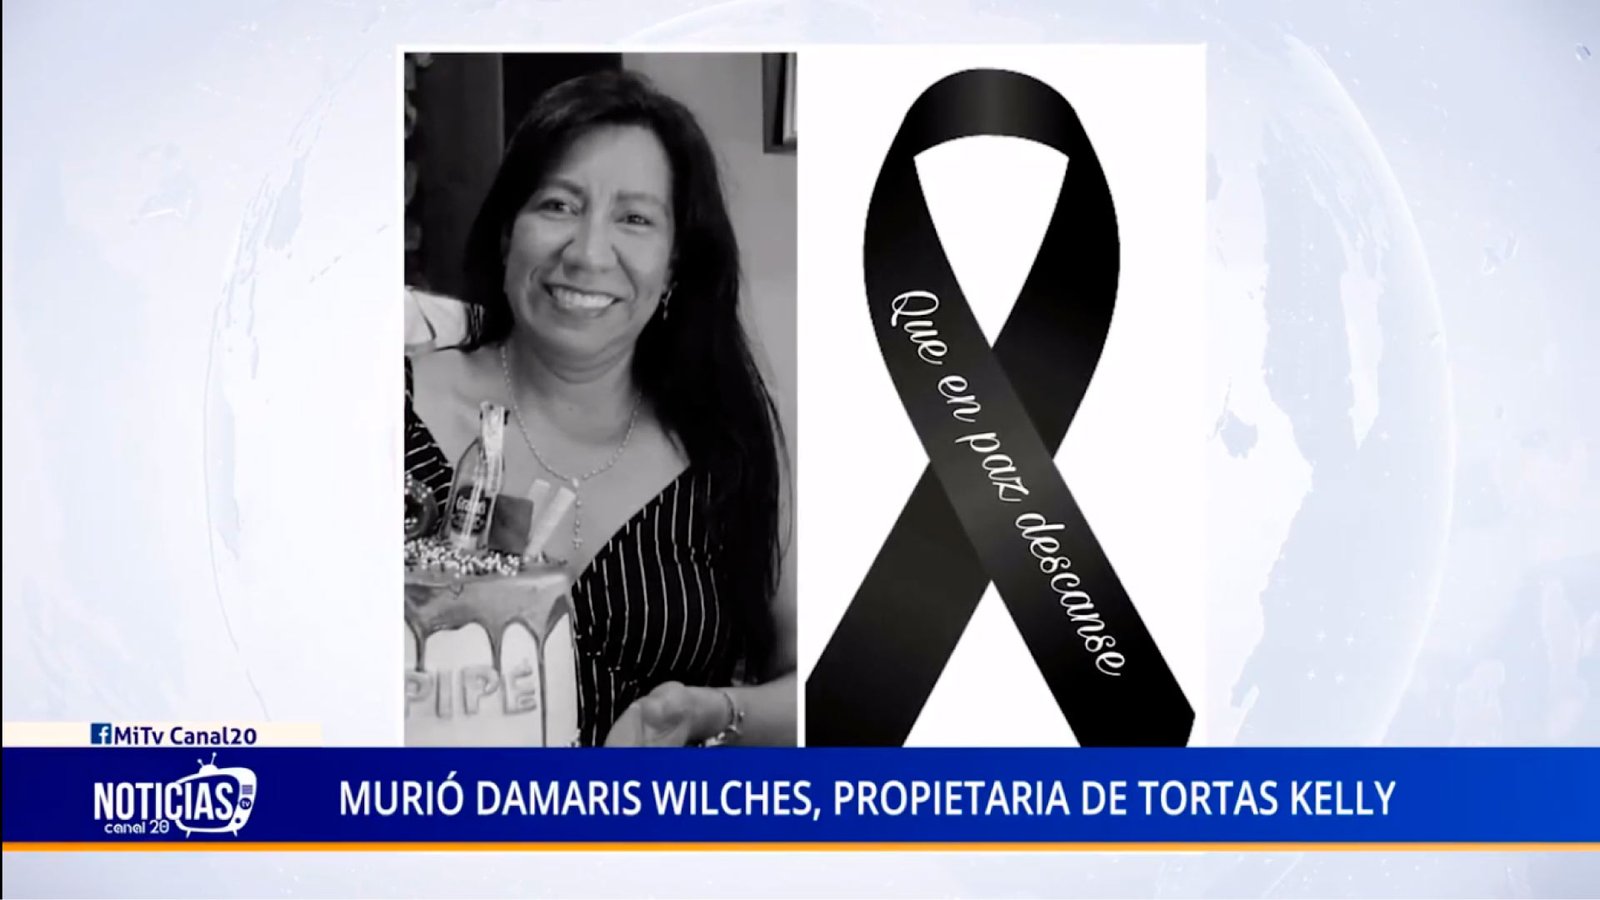 MURIÓ DAMARIS WILCHES, PROPIETARIA DE TORTAS KELLY